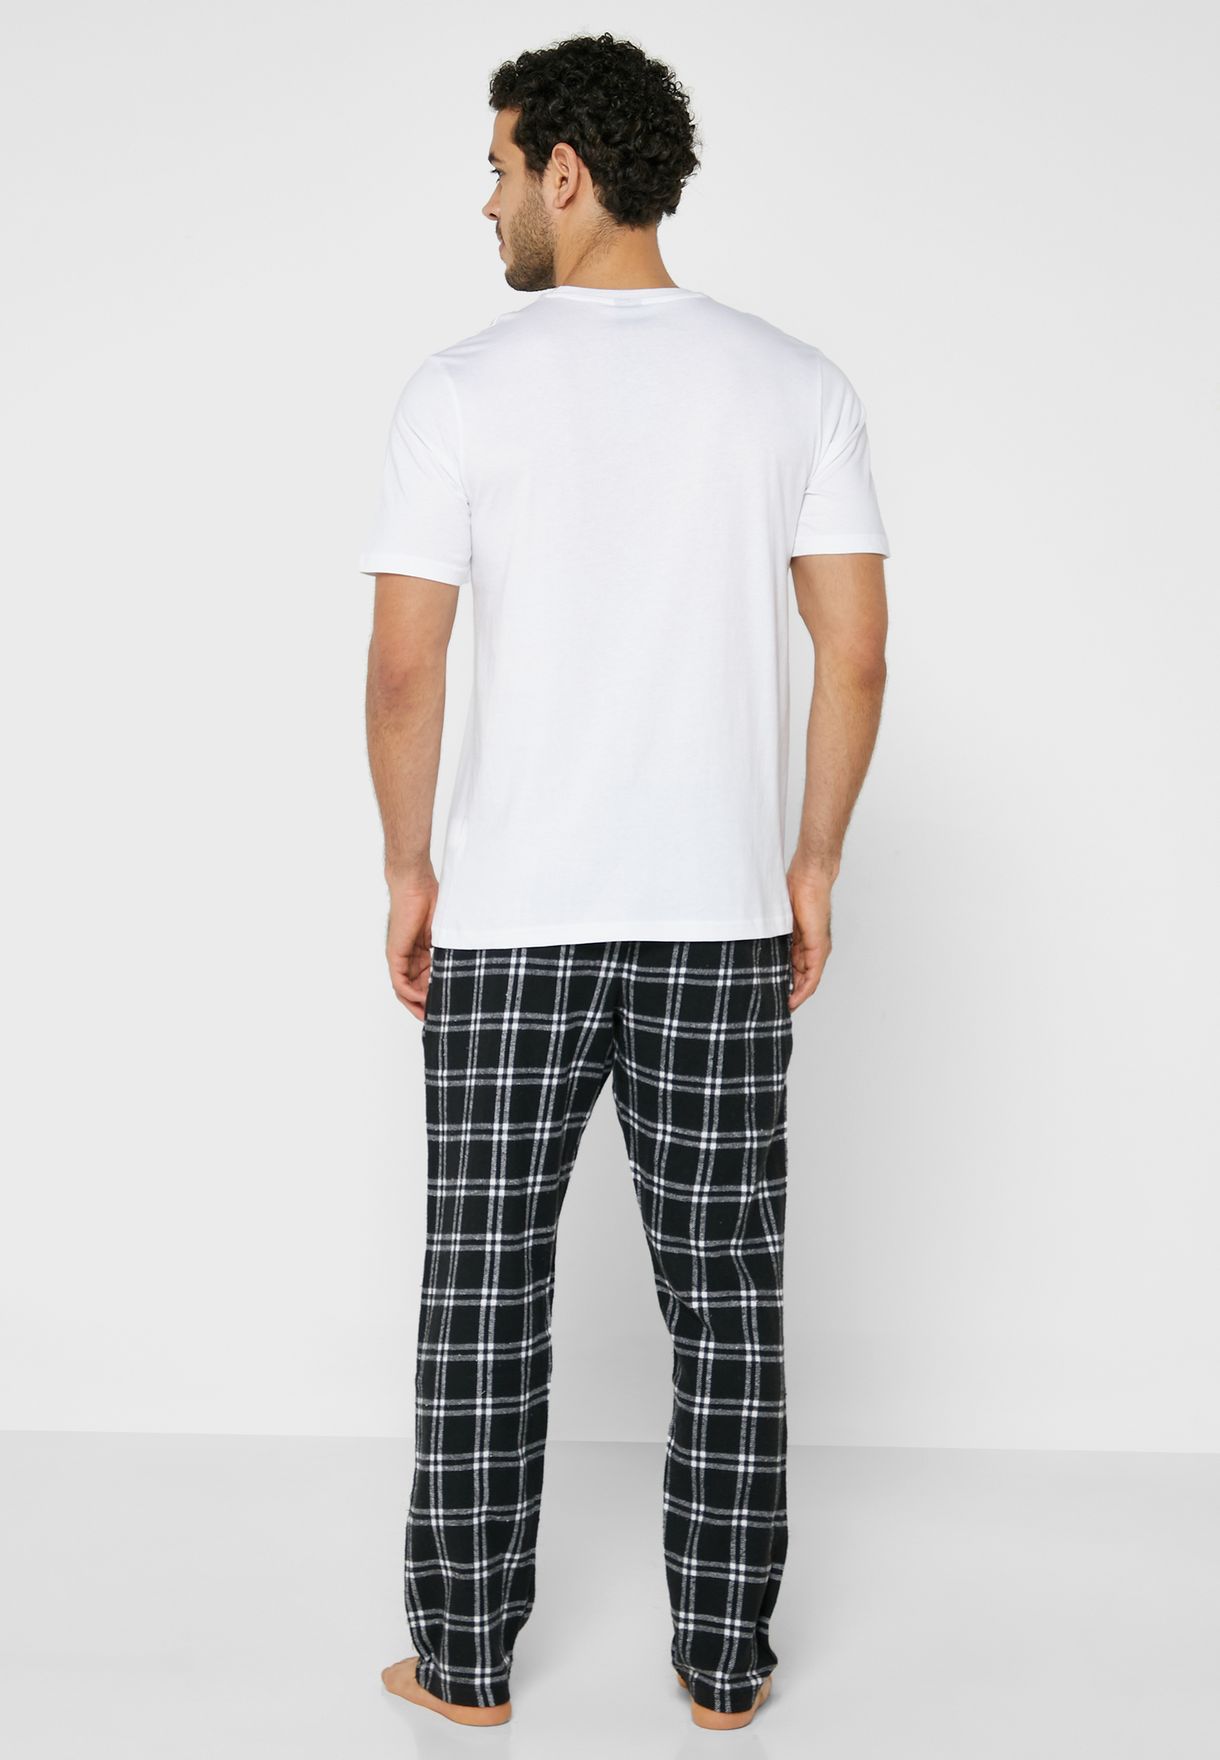 T-Shirt & Checked Pyjama Set